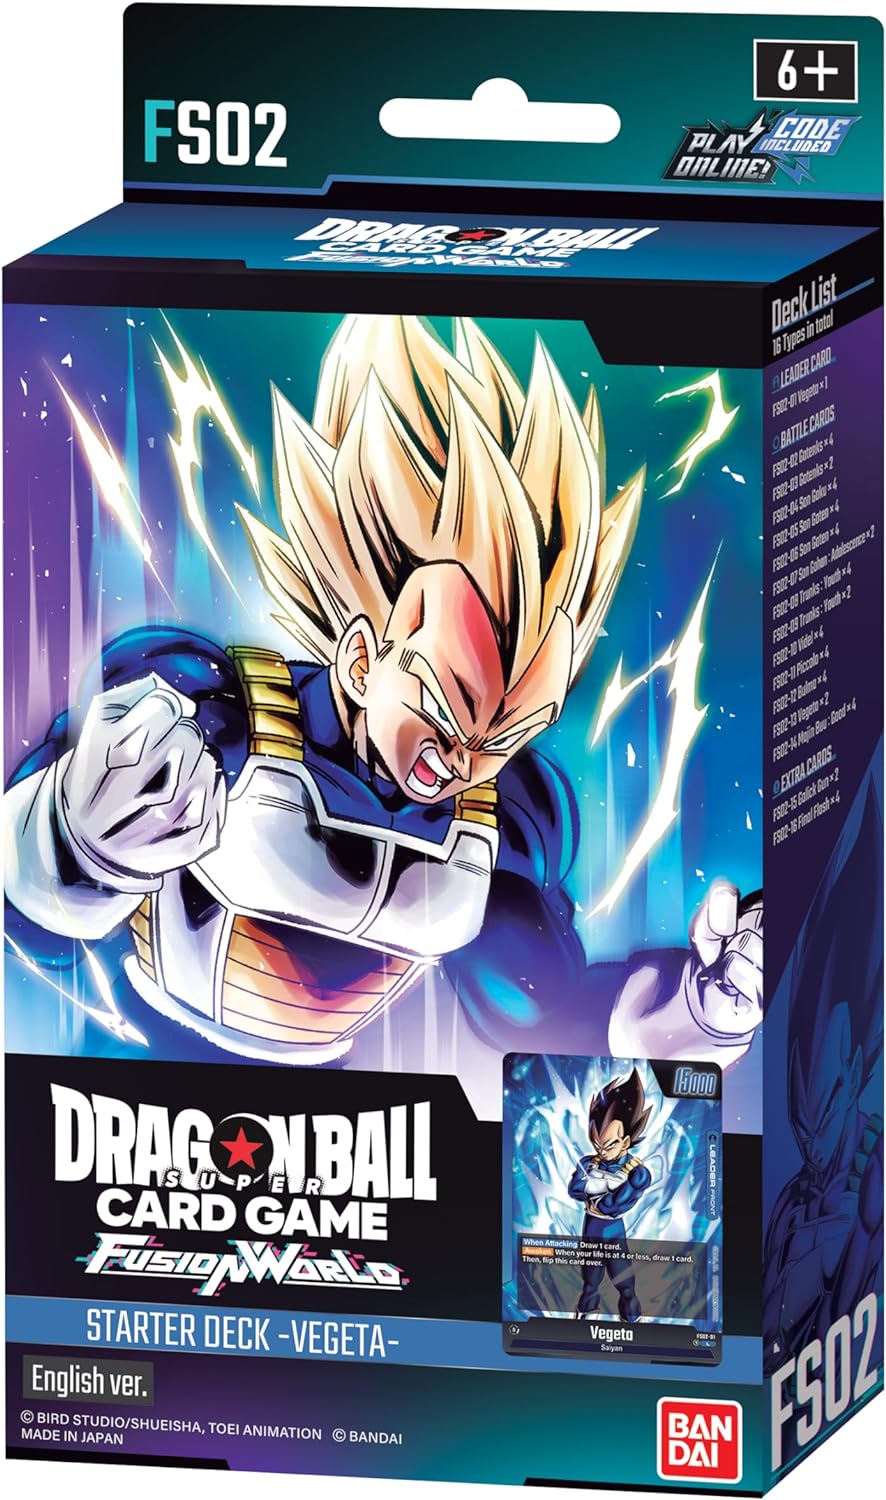 Dragon Ball Super Card Game: Starter Deck - Vegeta - Fusion World (FS02) - Englisch